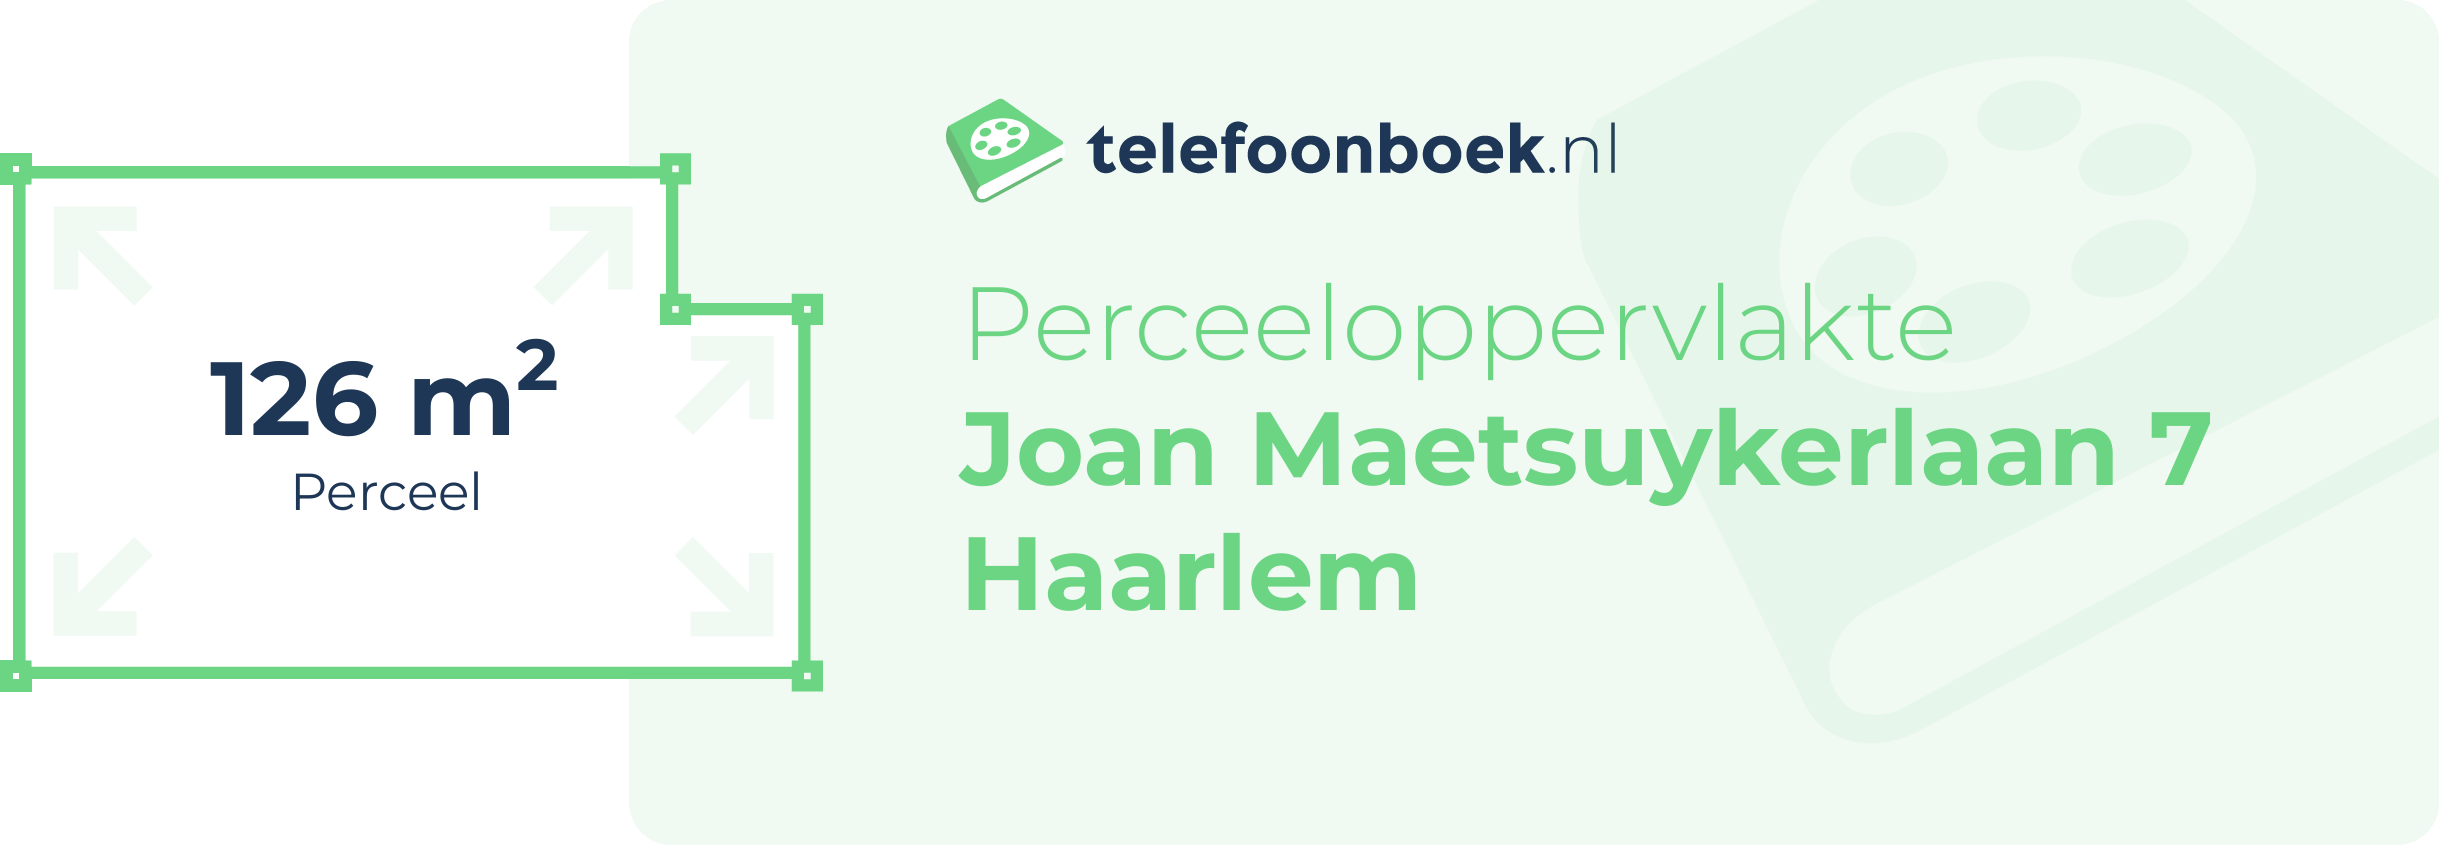 Perceeloppervlakte Joan Maetsuykerlaan 7 Haarlem